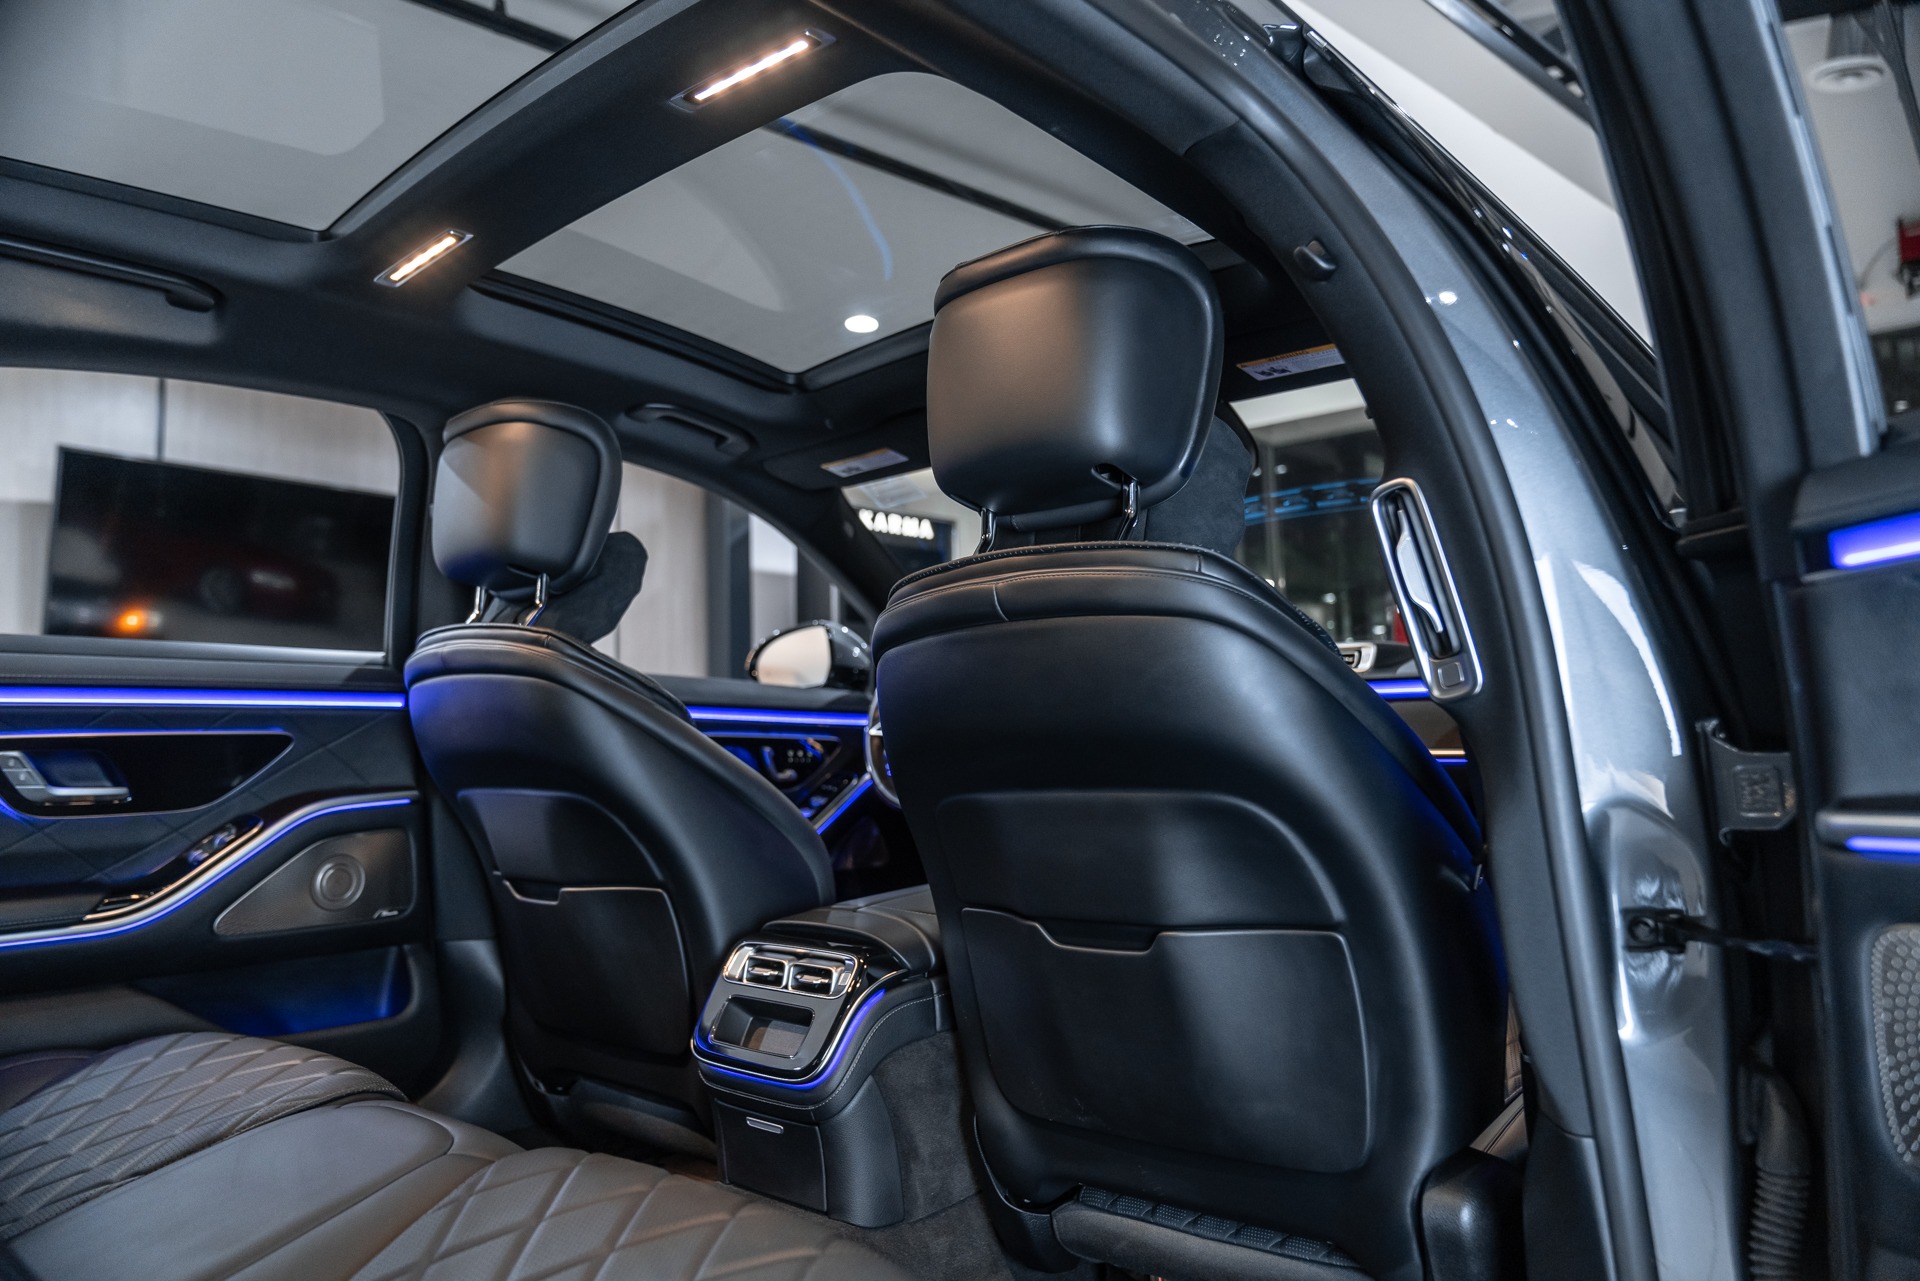 Used-2021-Mercedes-Benz-S-Class-S580-4matic-Sedan-Massage-Front-Seats-Sunroof-20-Inch-Multispoke-Wheels